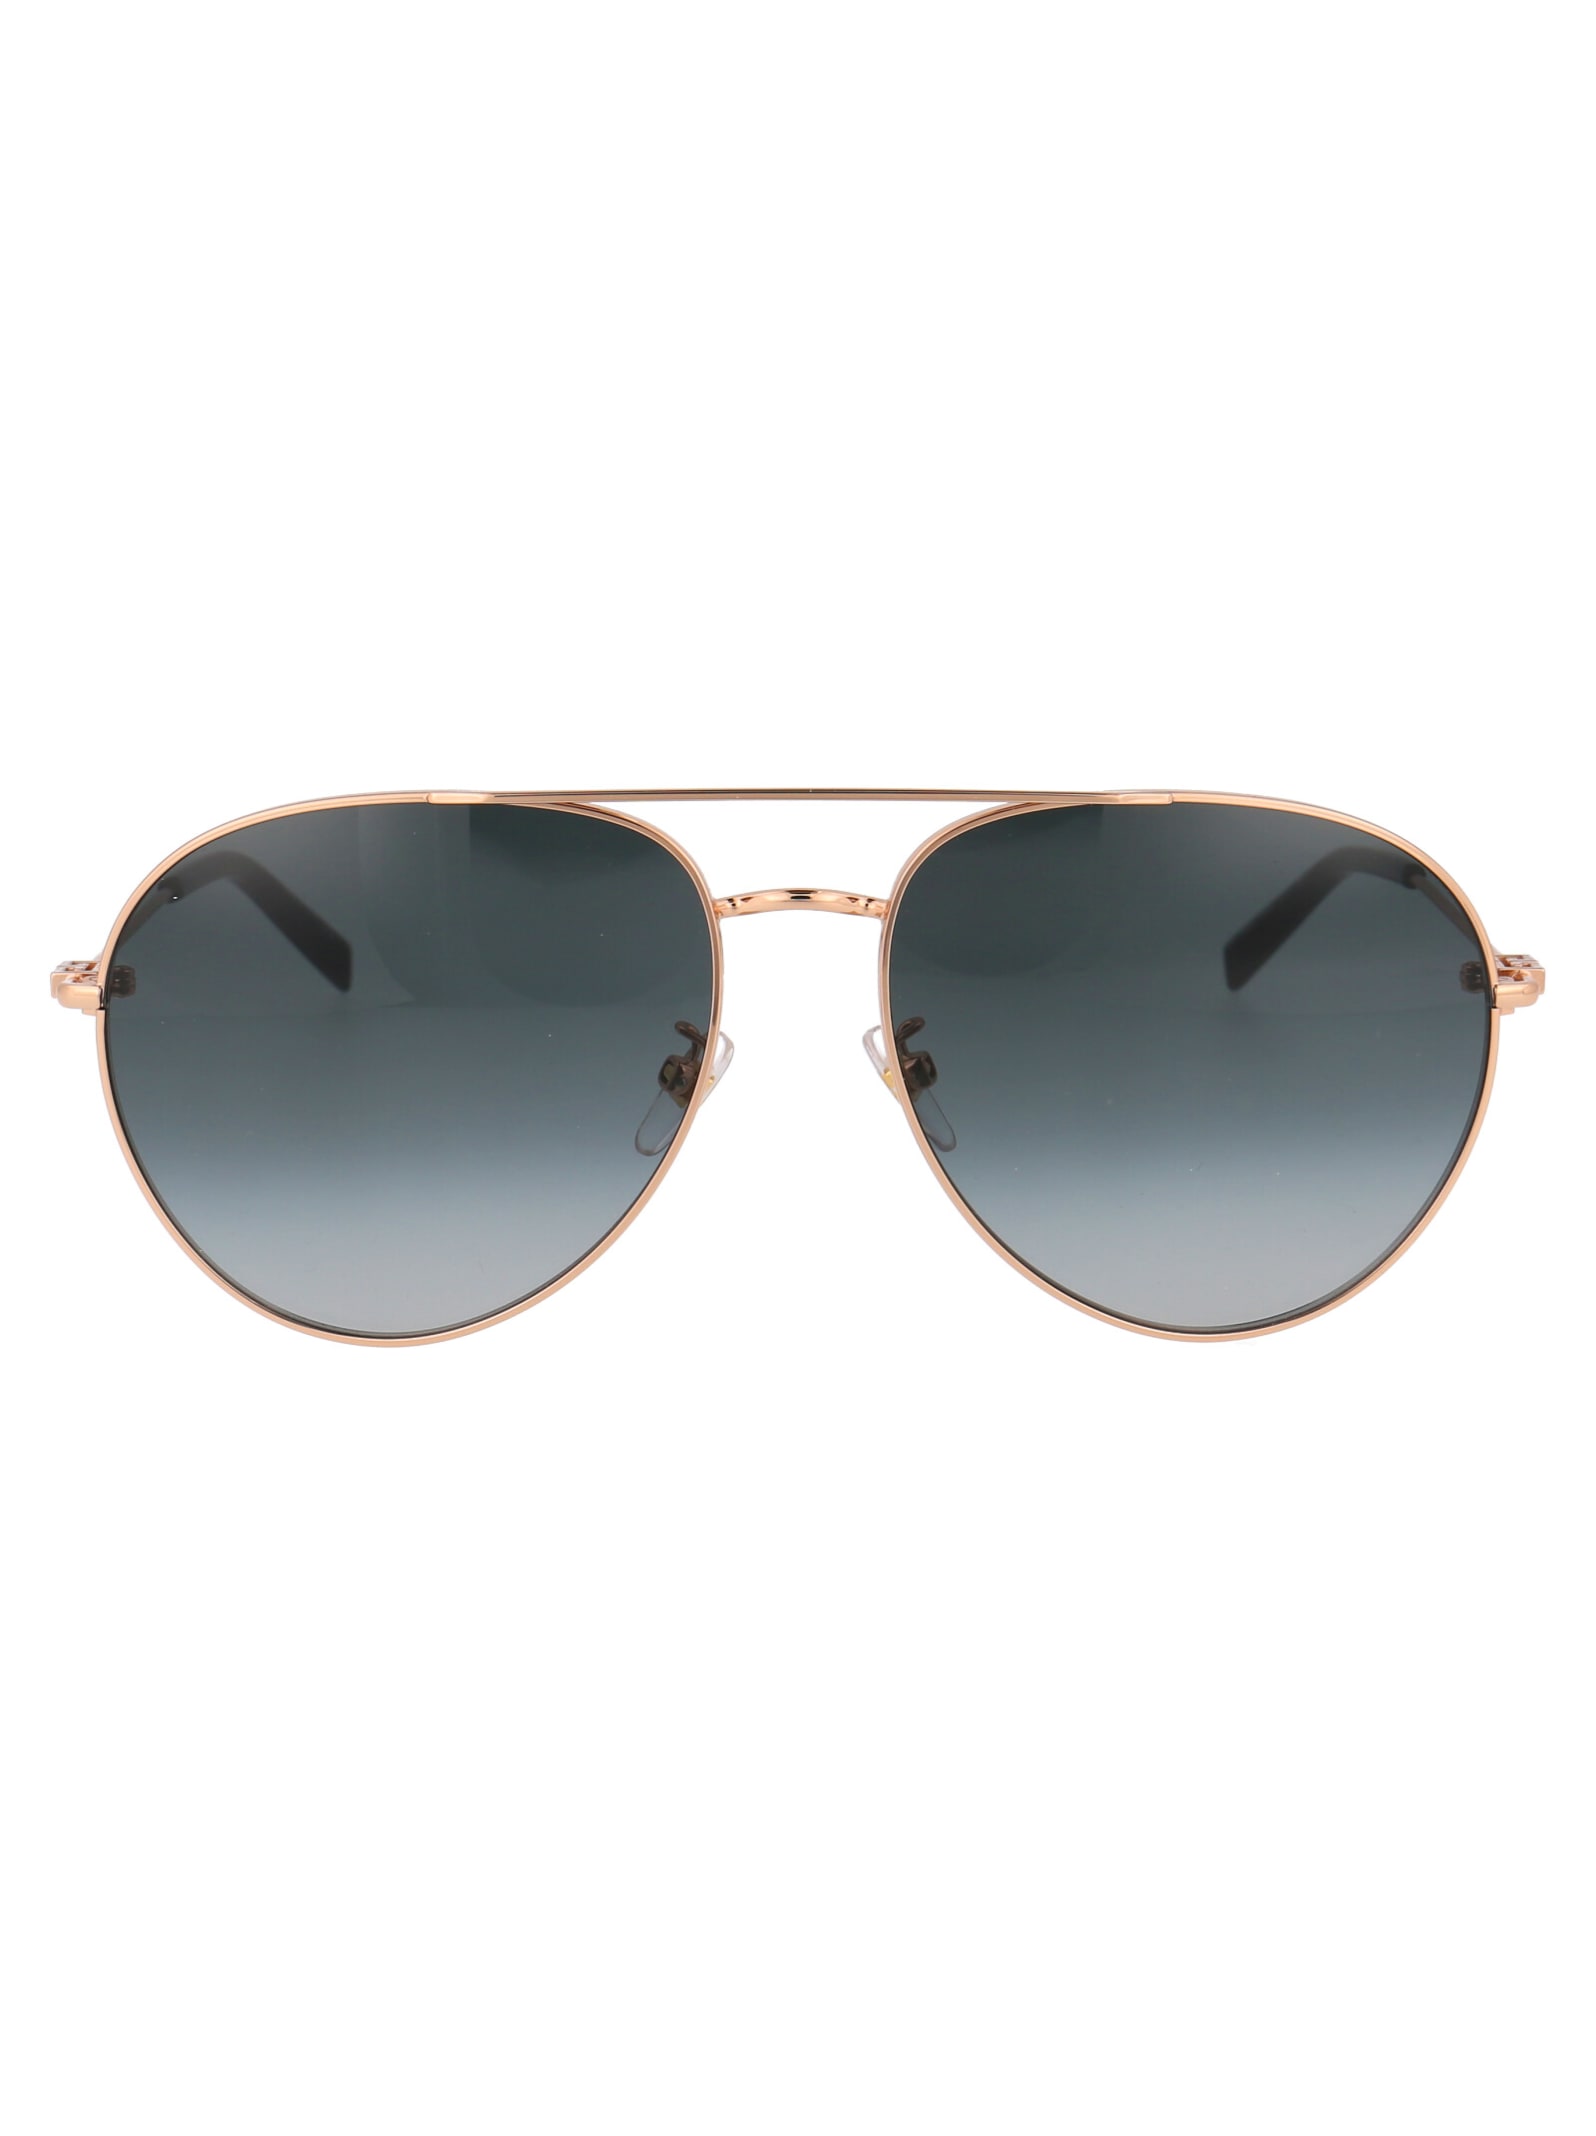 Givenchy Gv 7196/g/s Sunglasses